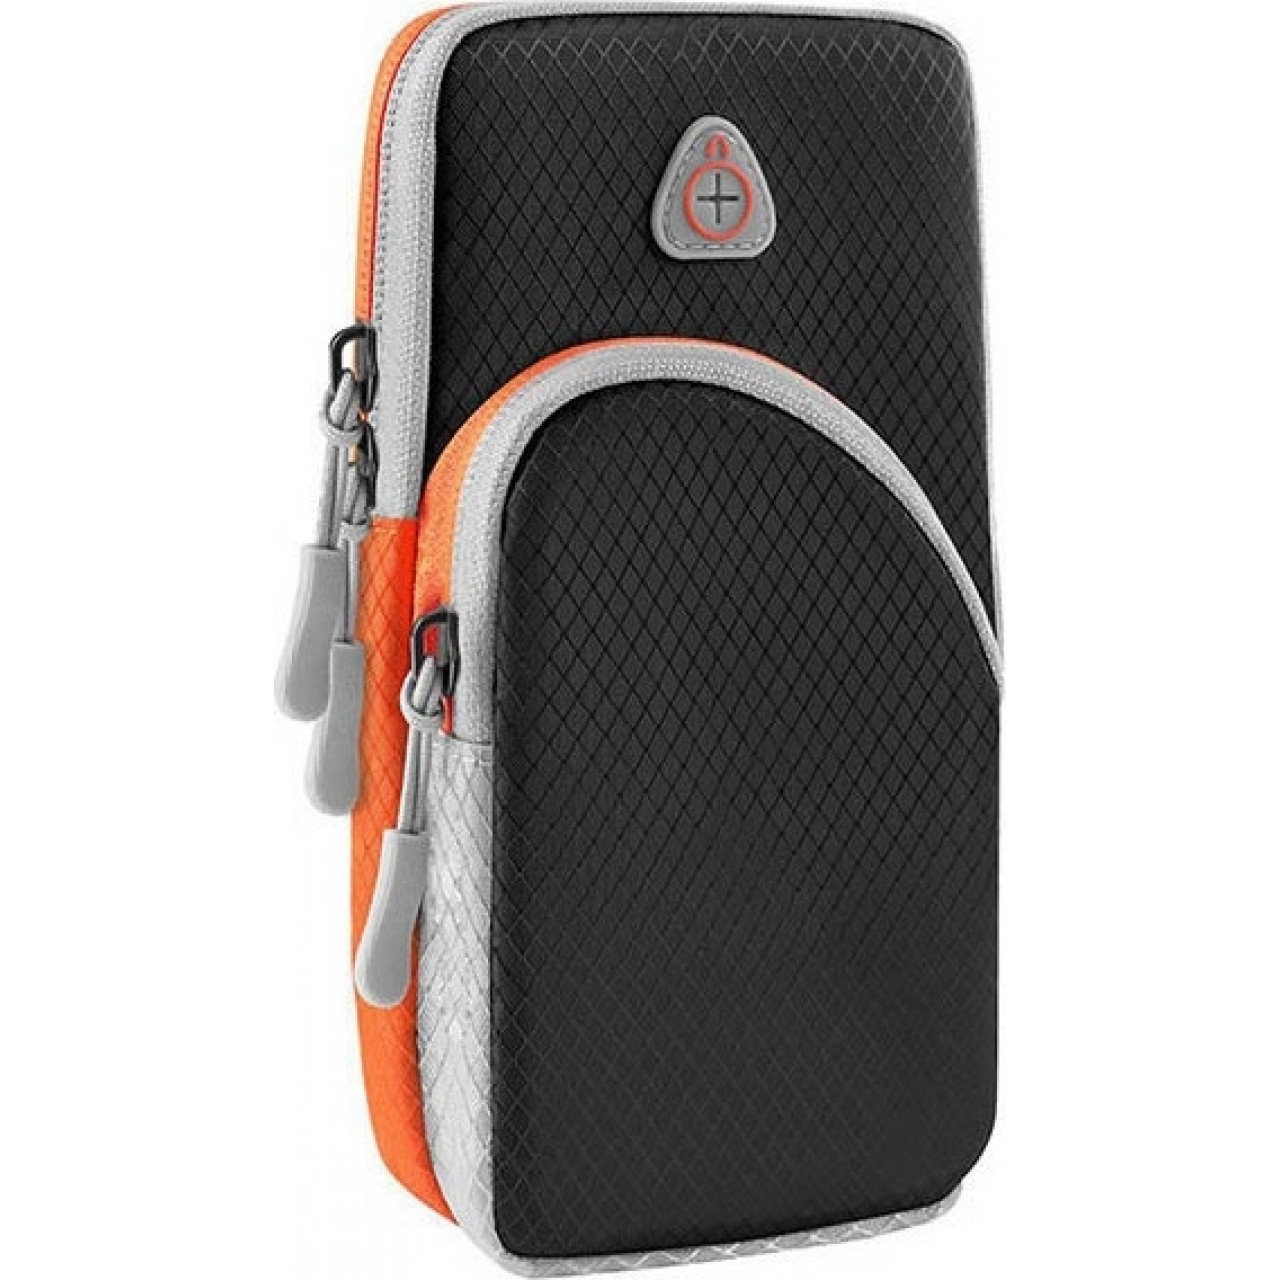 Running Armband Sports Phone Case 20x4x9,5cm - 5596 - Μαύρο/Γκρι/Πορτοκαλί - OEM